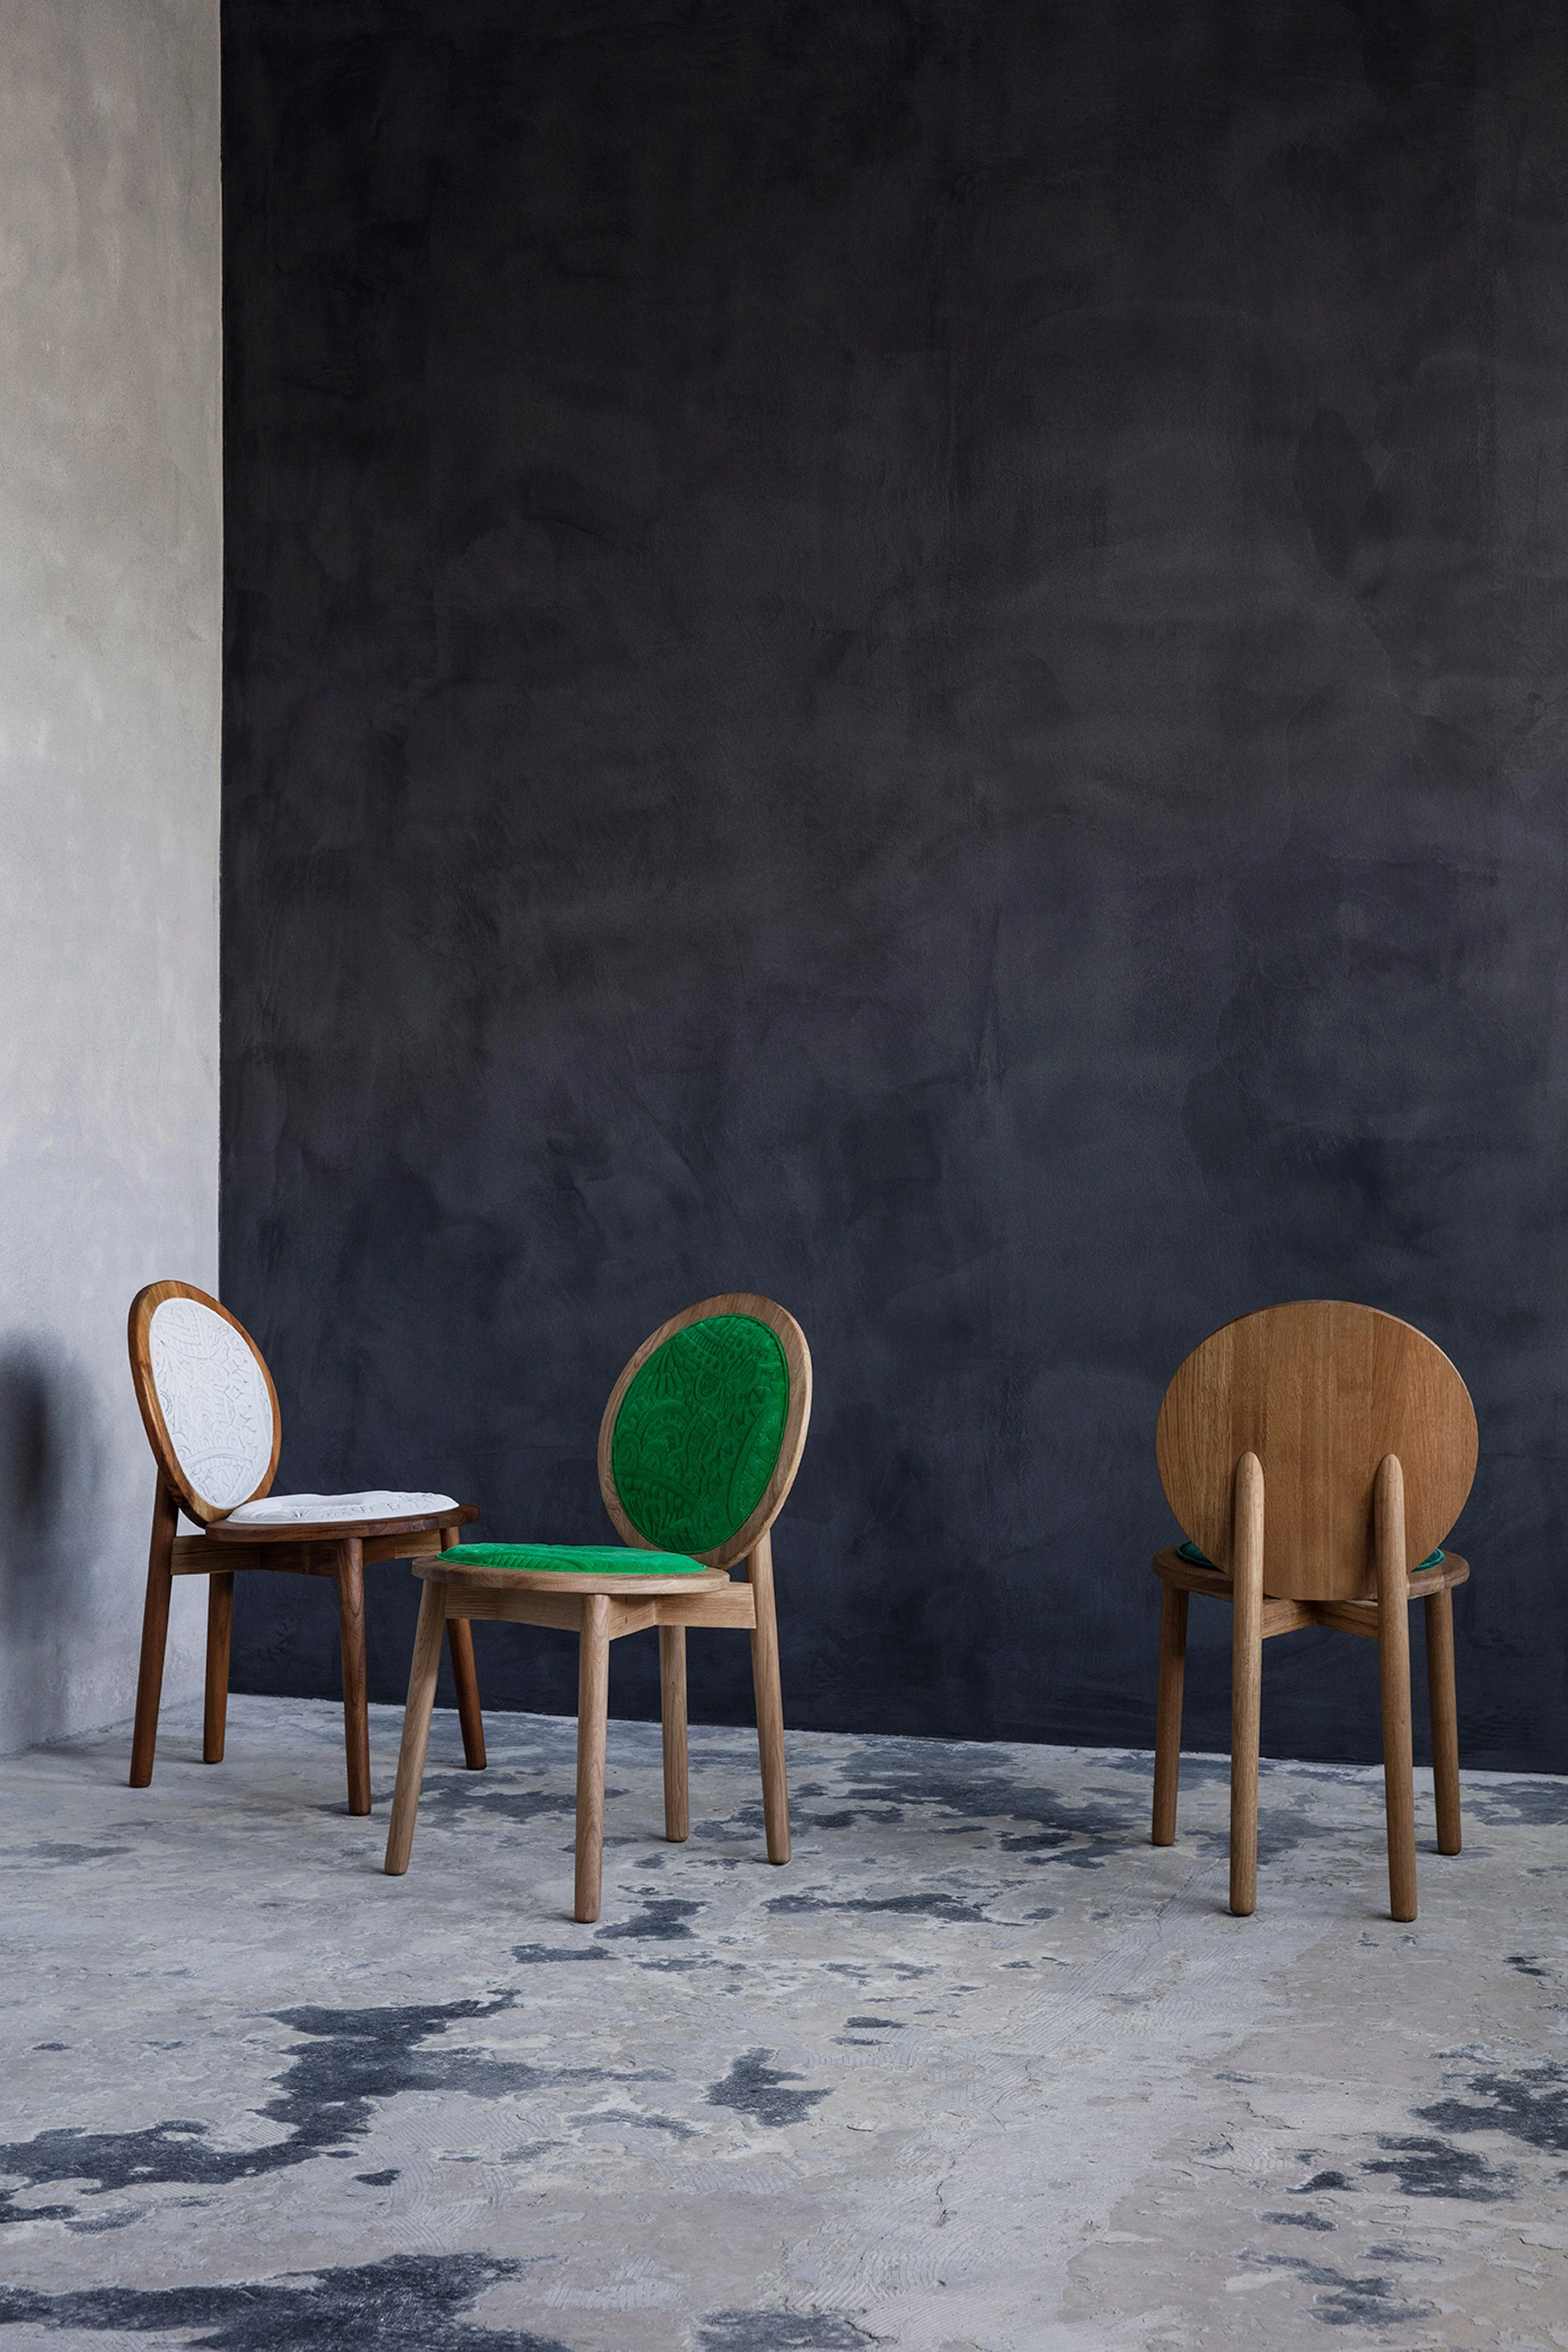 Boris Berlin为Ca’lyah提供的Tranquebar座位|ART-Arrakis | 建筑室内设计的创新与灵感